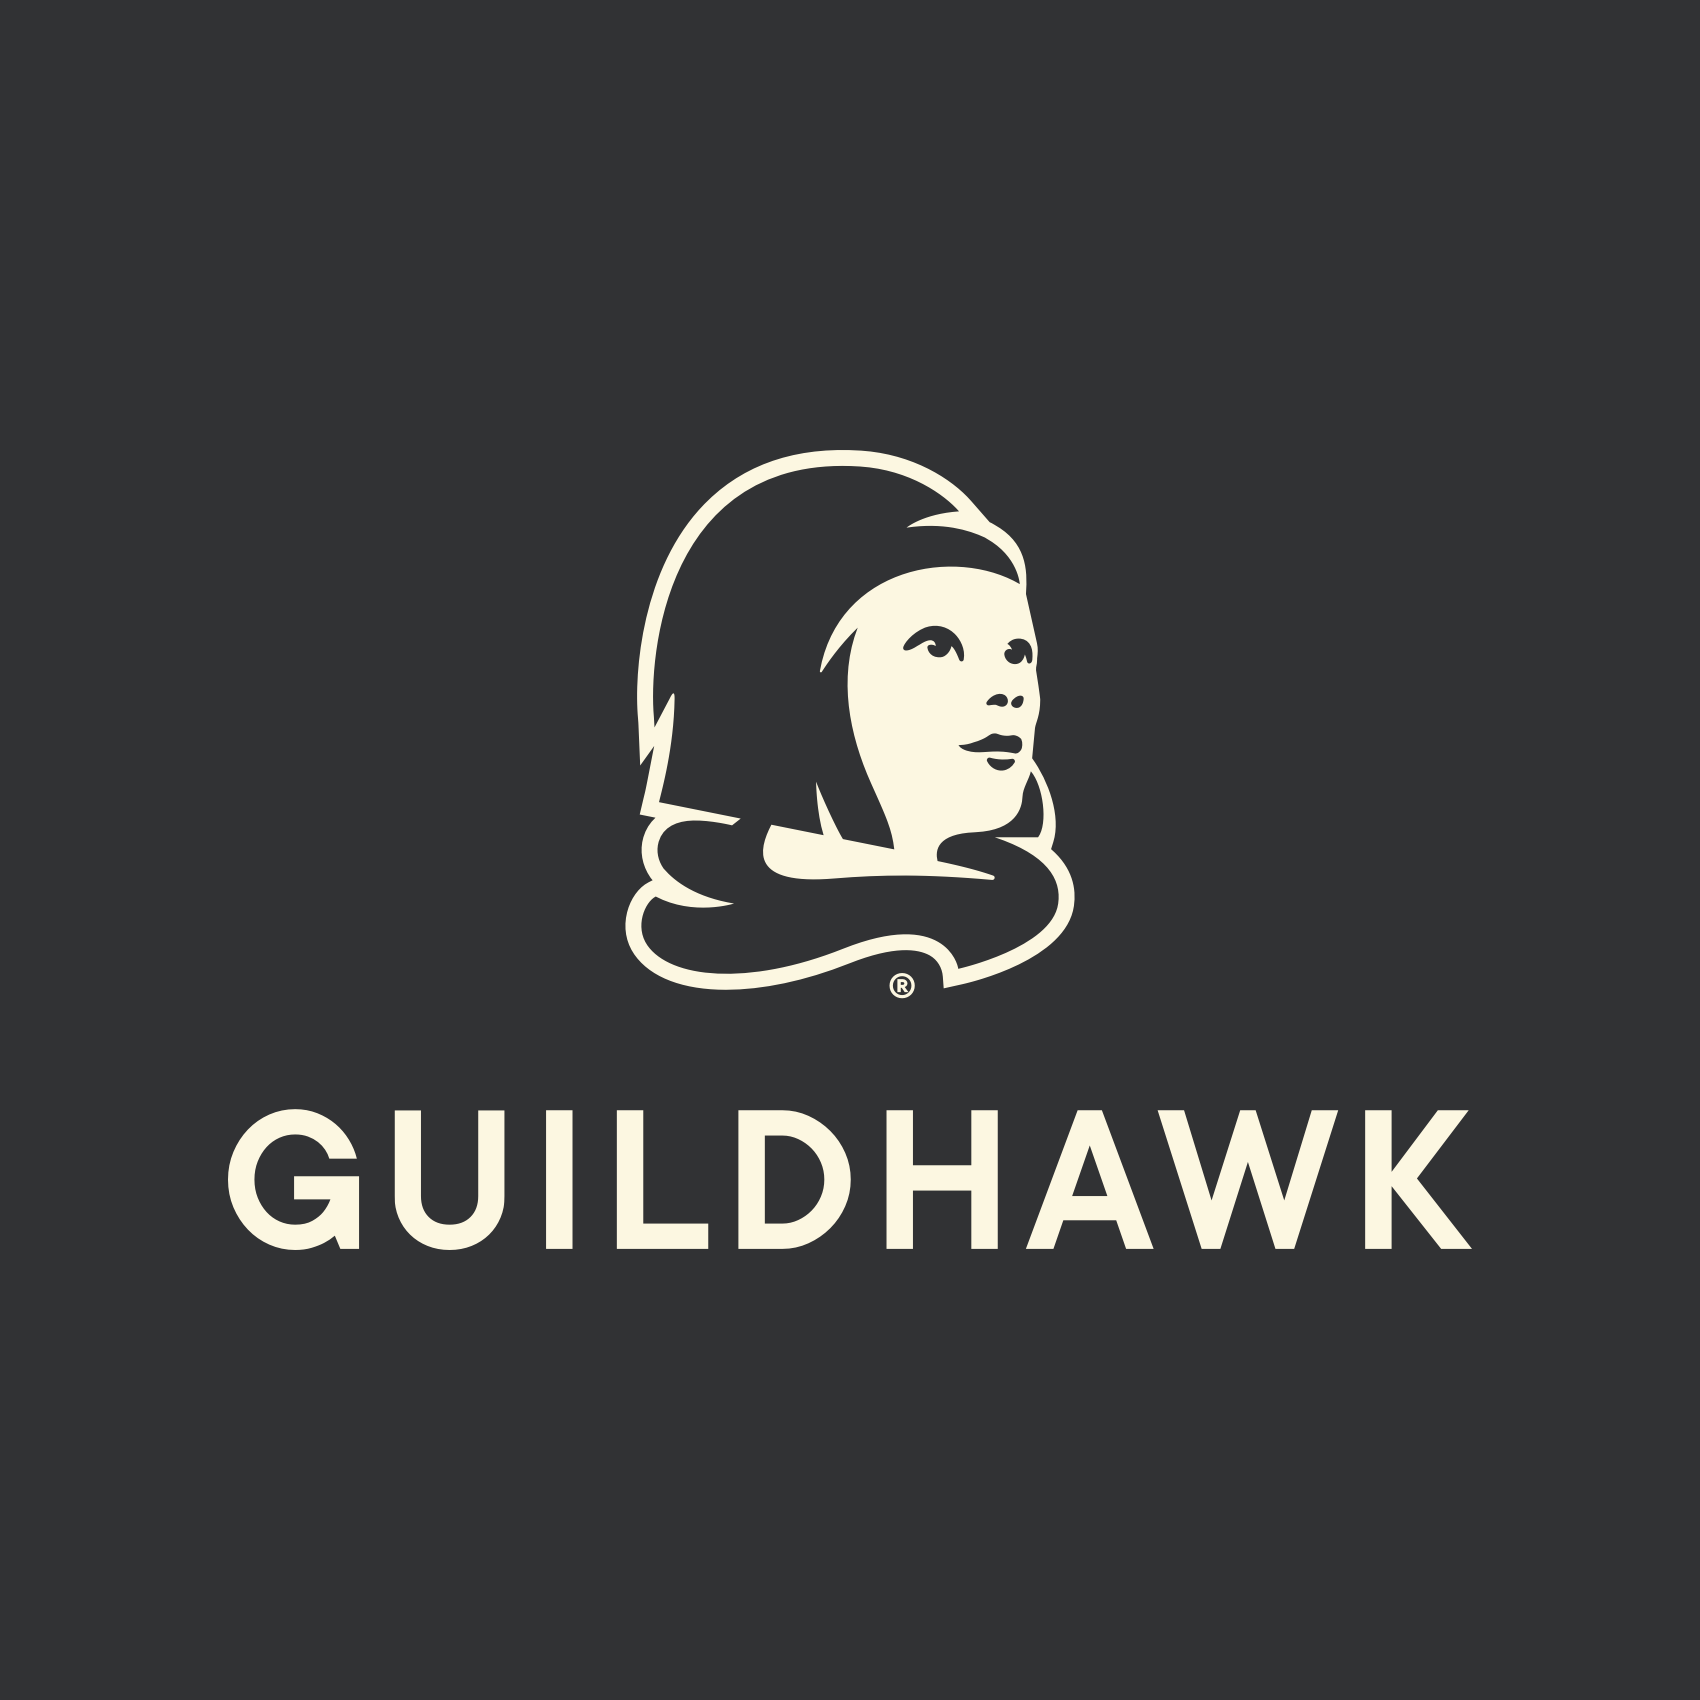 Guildhawk - Social Profile Image 02